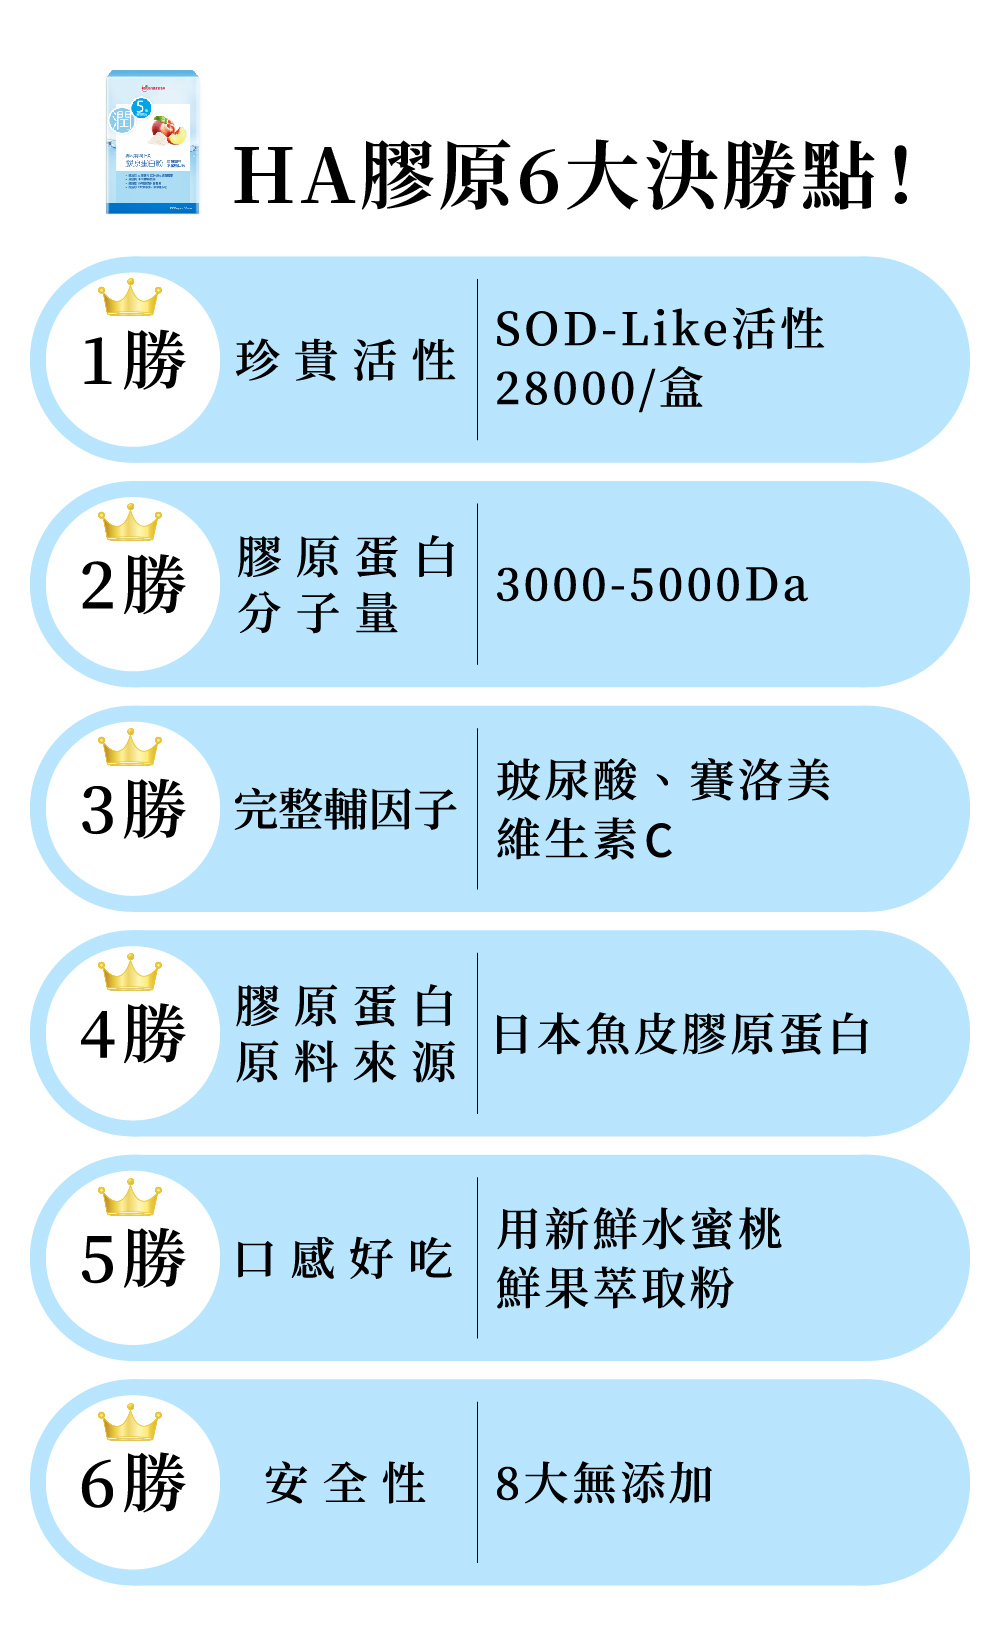 【UDR】特潤HA膠原蛋白粉(30包/盒)2500mg 玻尿酸 賽洛美 維他命C